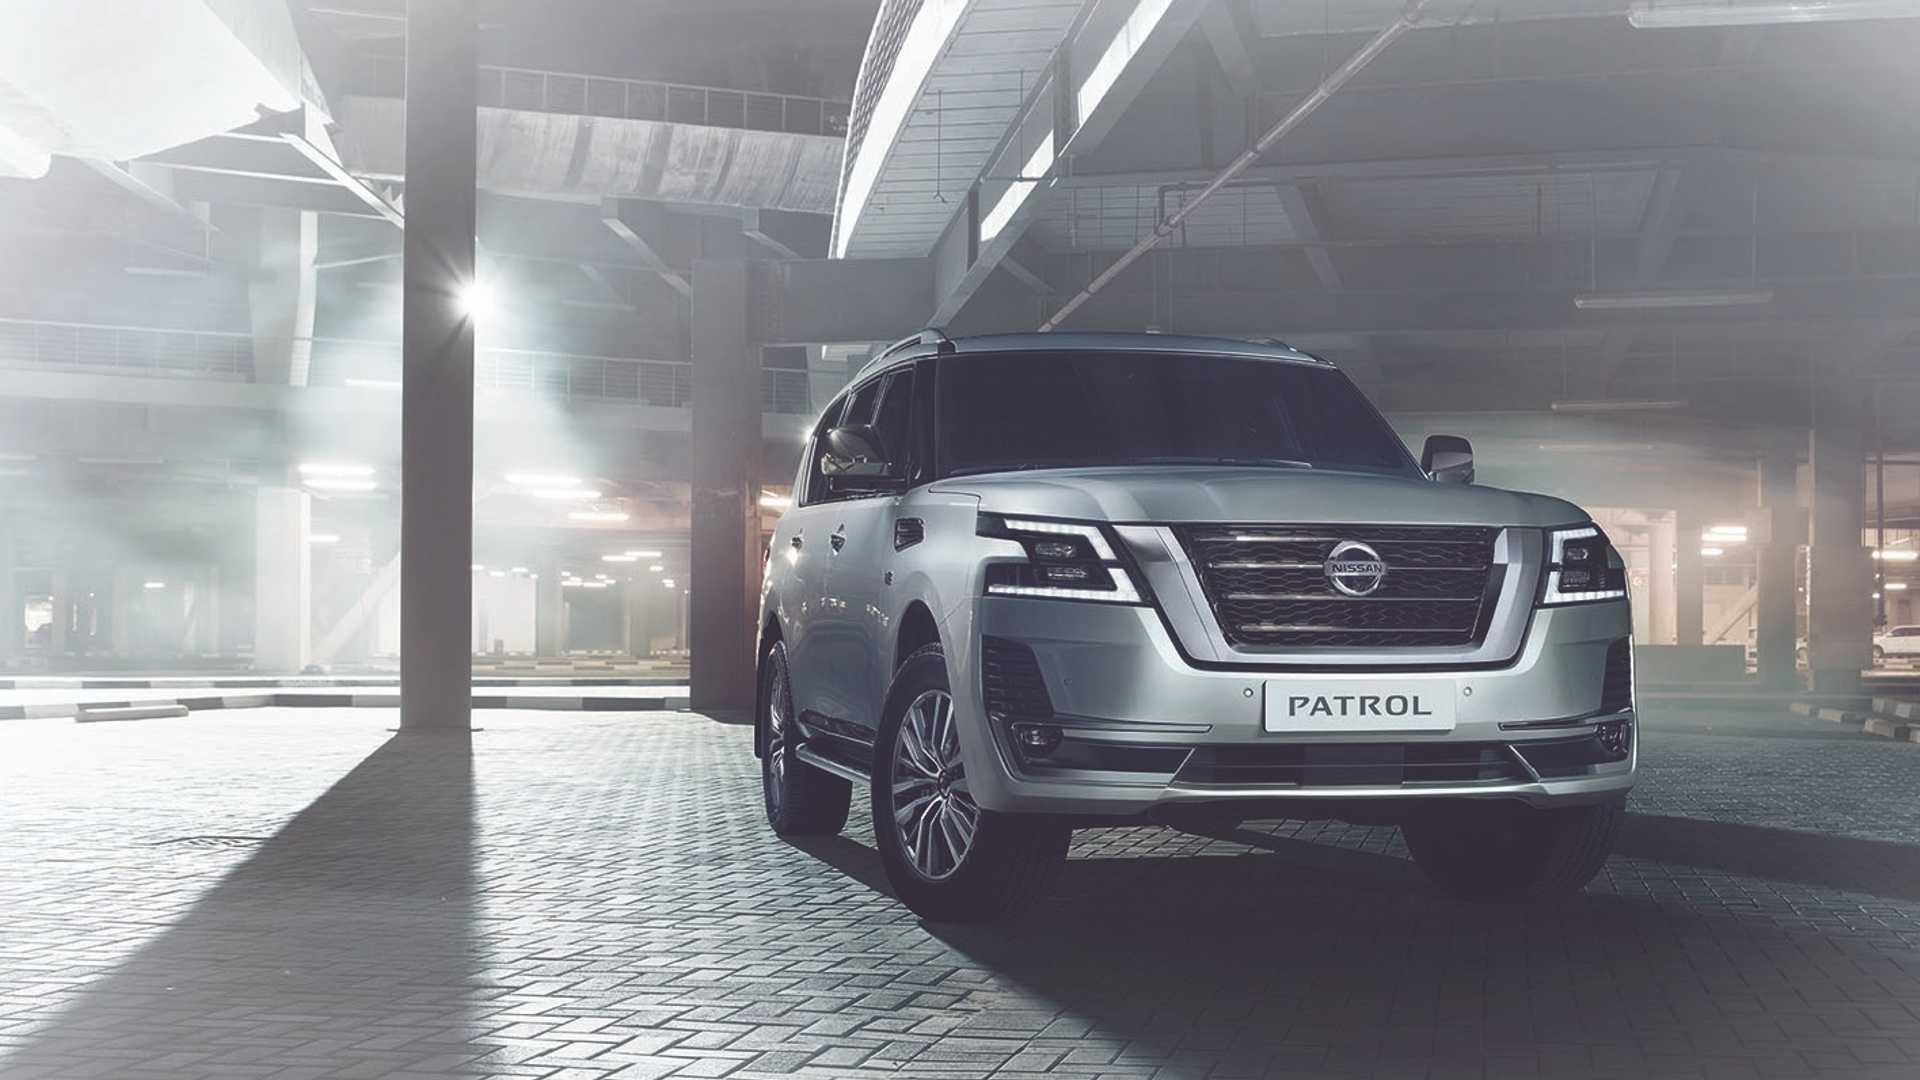 Nissan Patrol 2020 การเปลี่ยนโฉมครั้งใหญ่ของออฟโรดในตำนาน